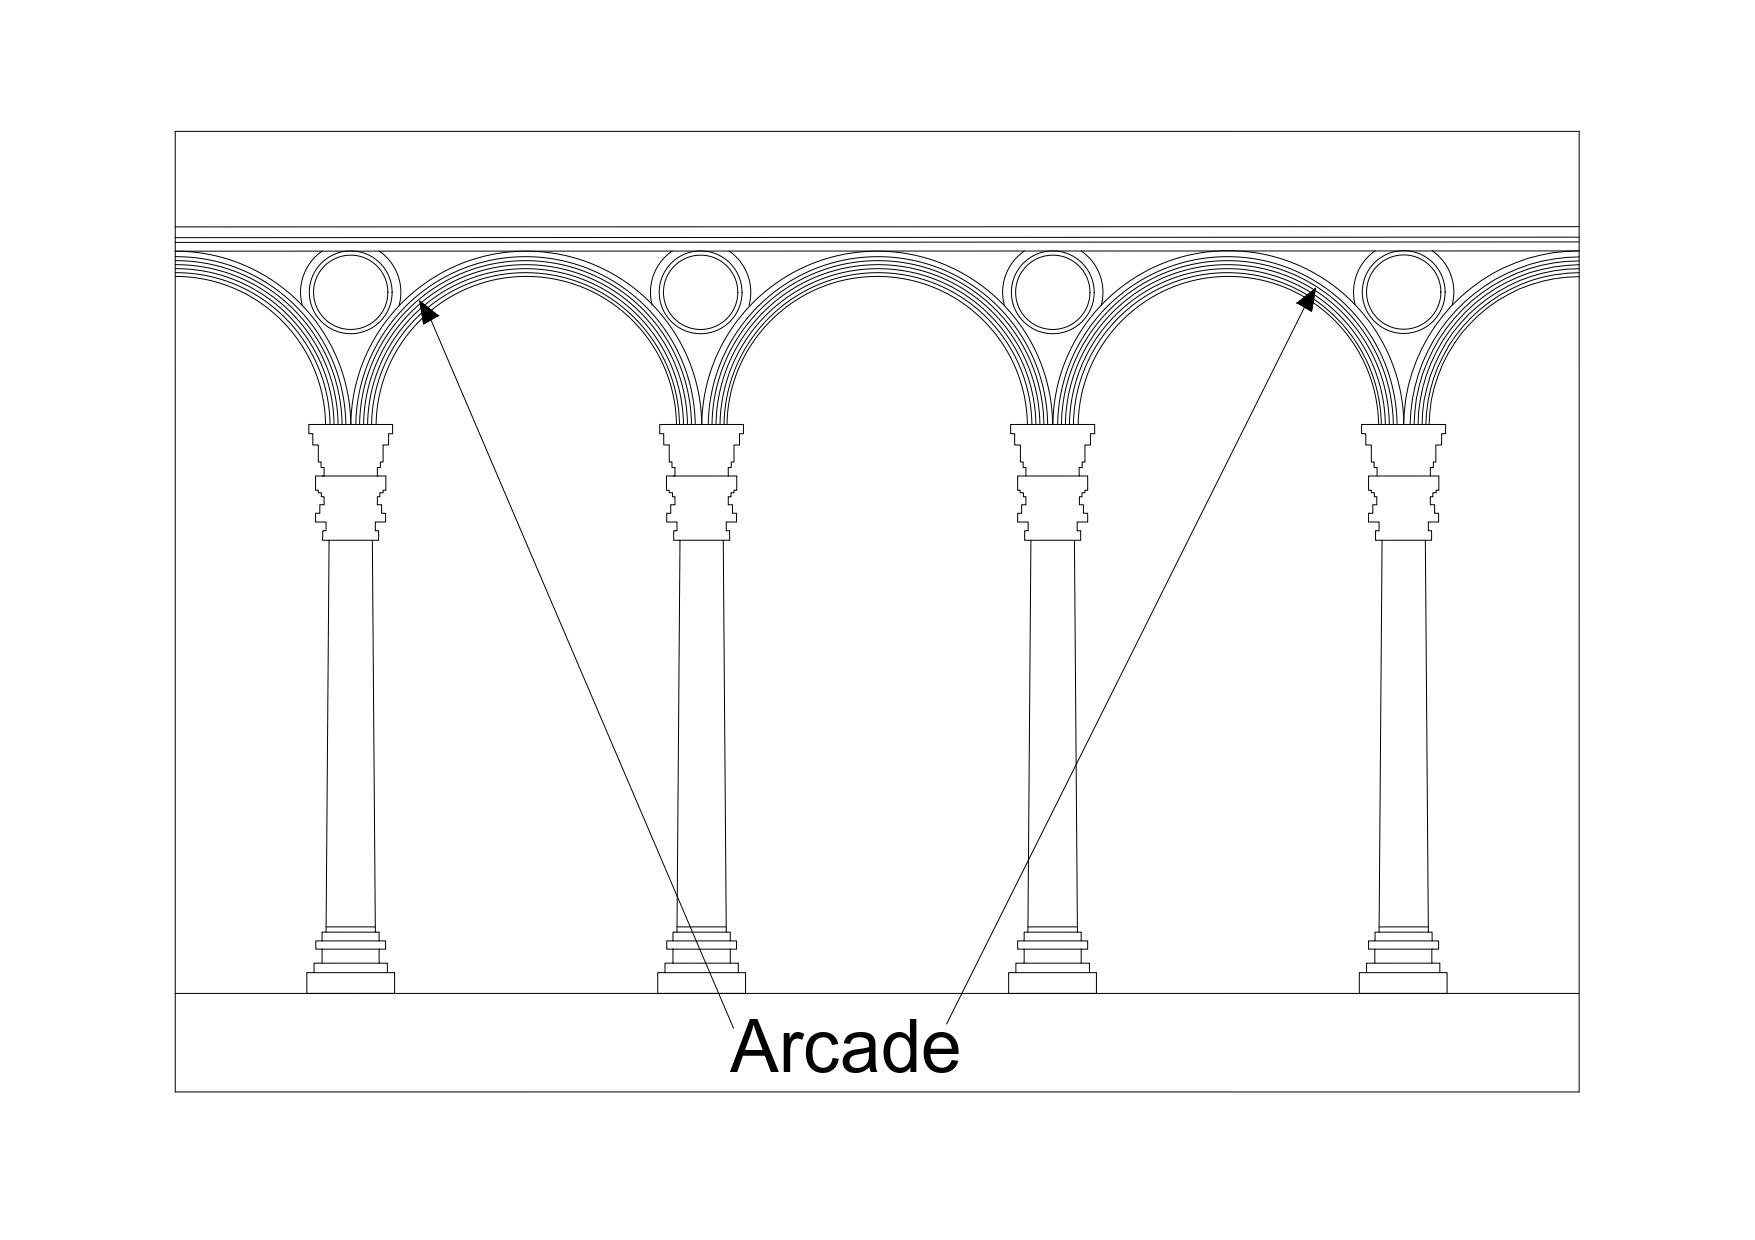 Arcade architecture
